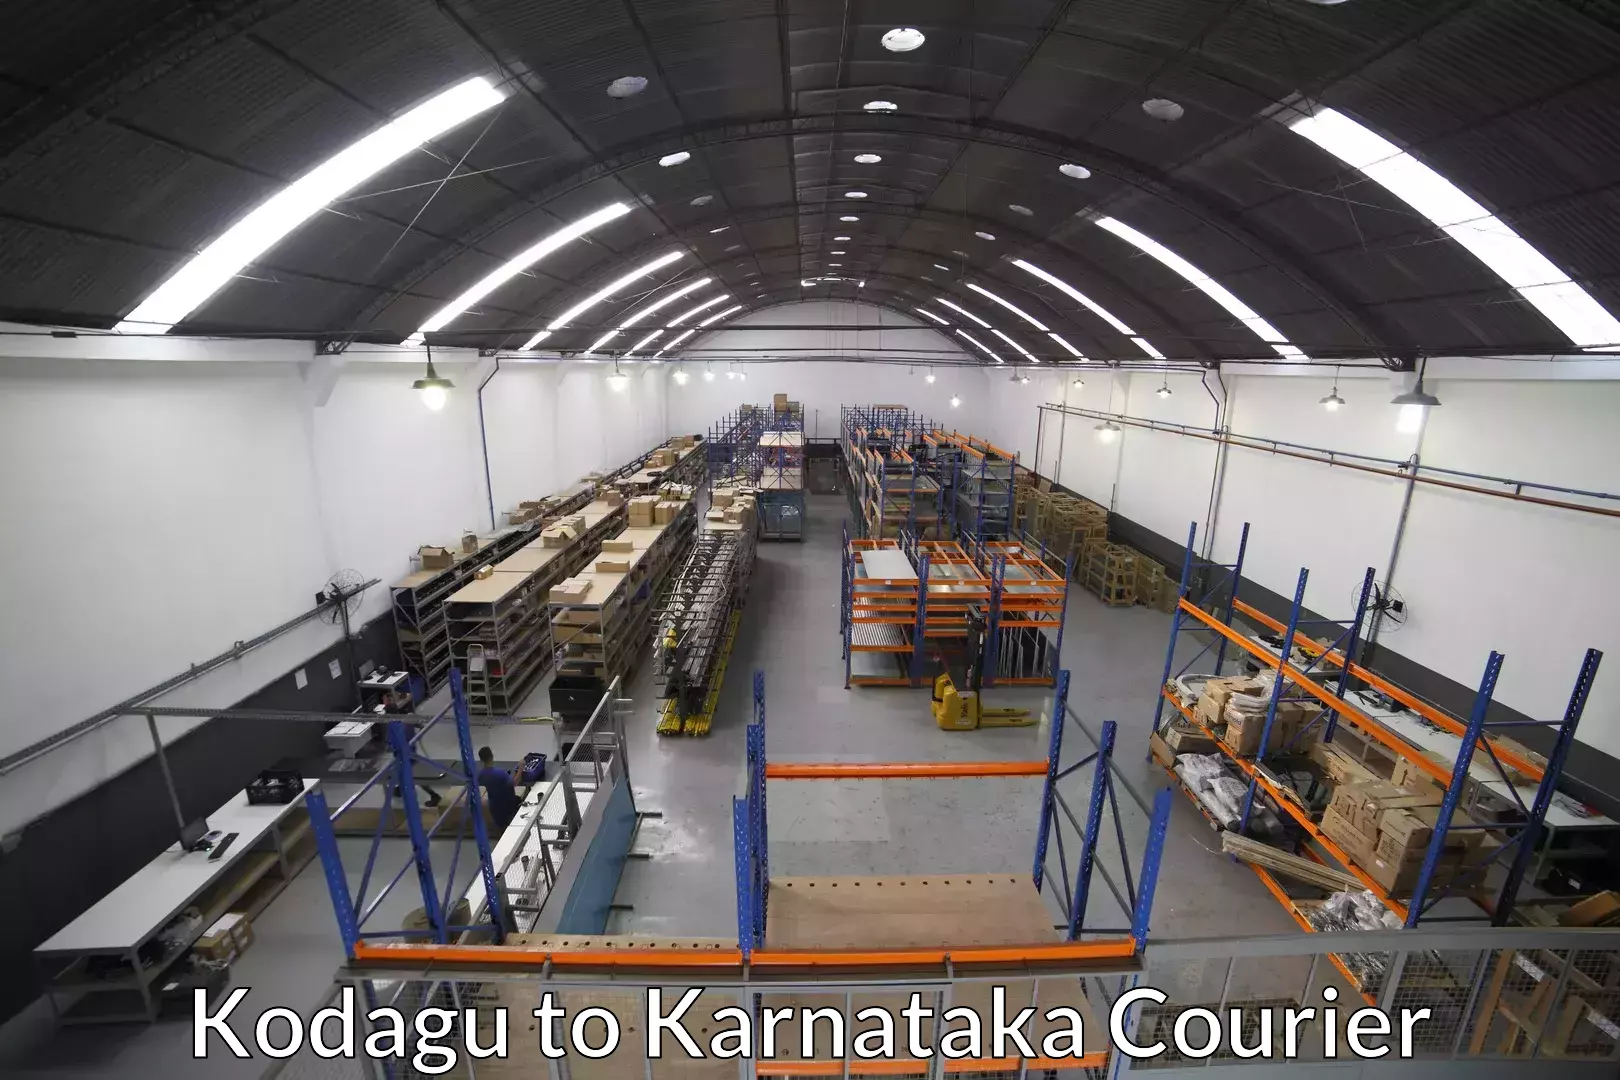 Quality relocation assistance Kodagu to Mangalore